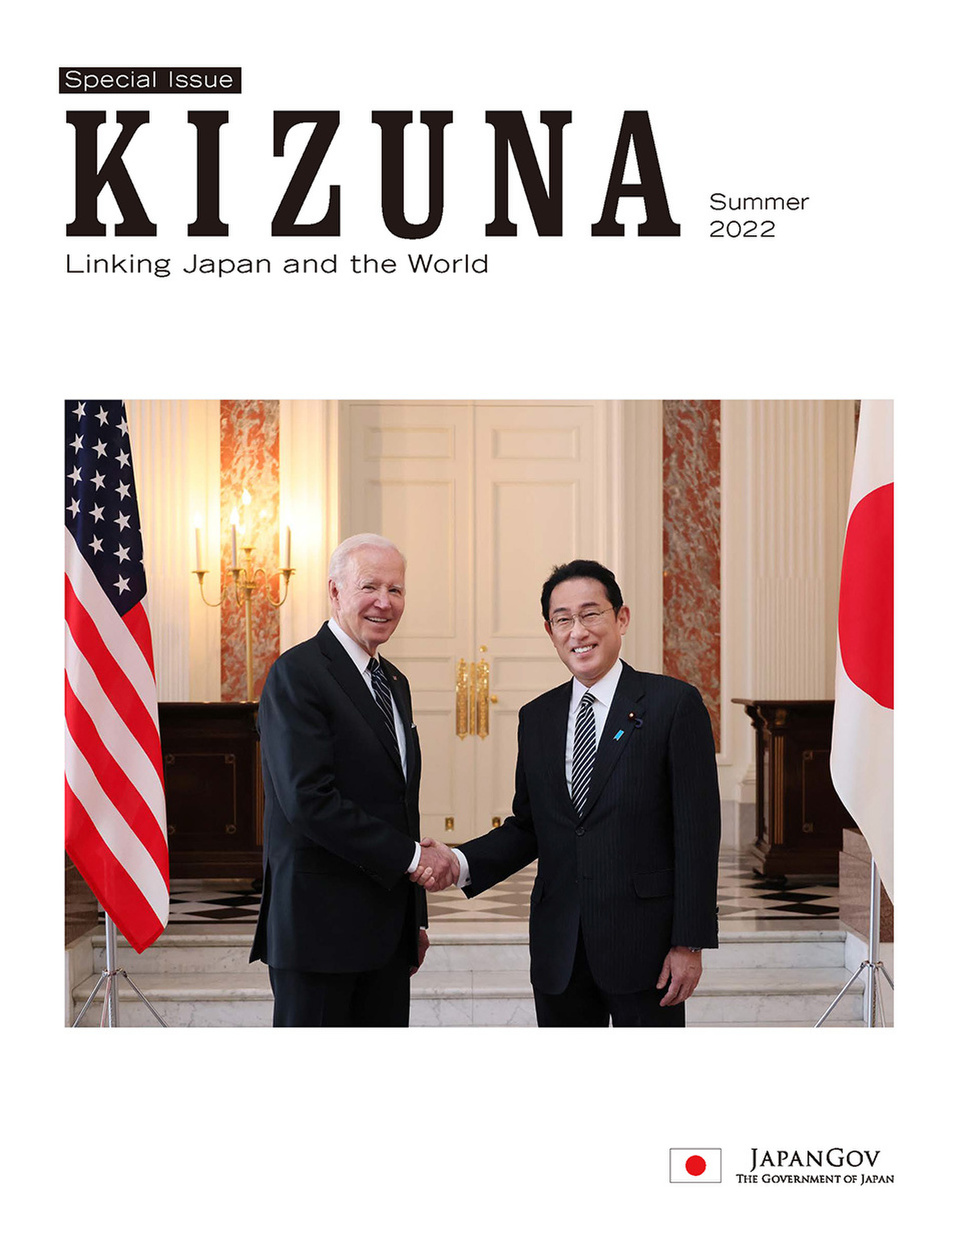 KIZUNA Summer 2022 Special Issue